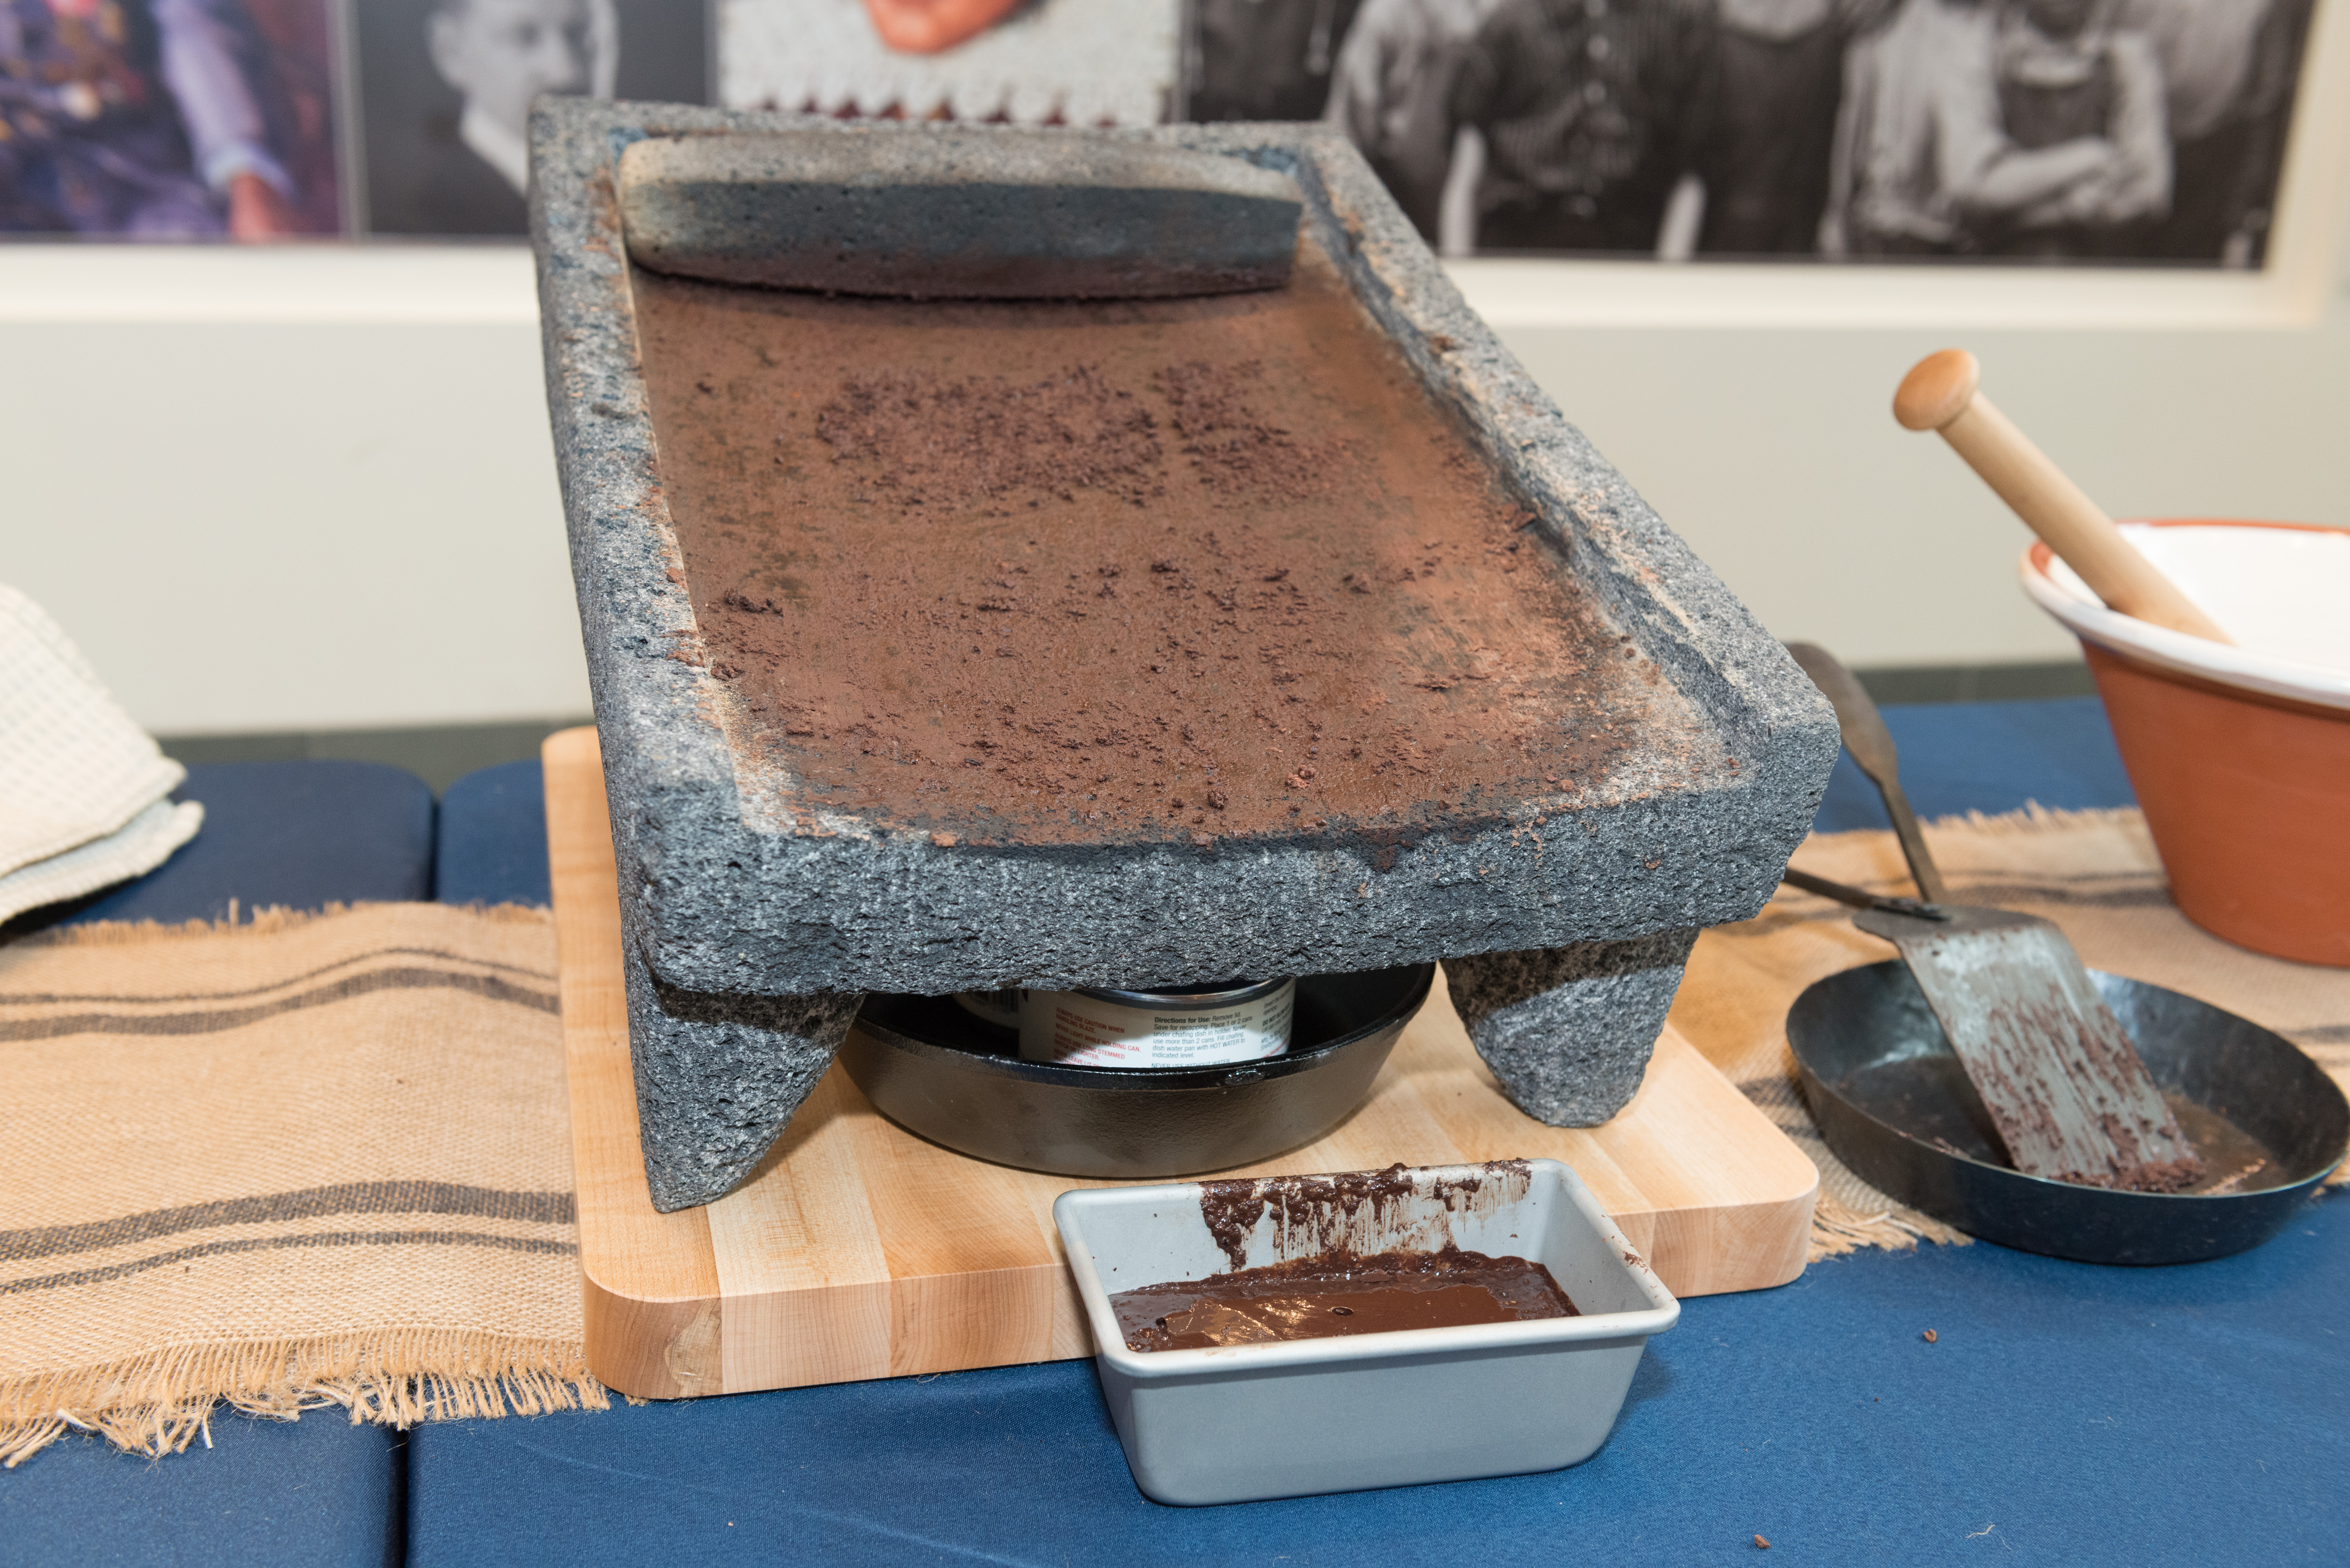 Historic chocolate-making tools.